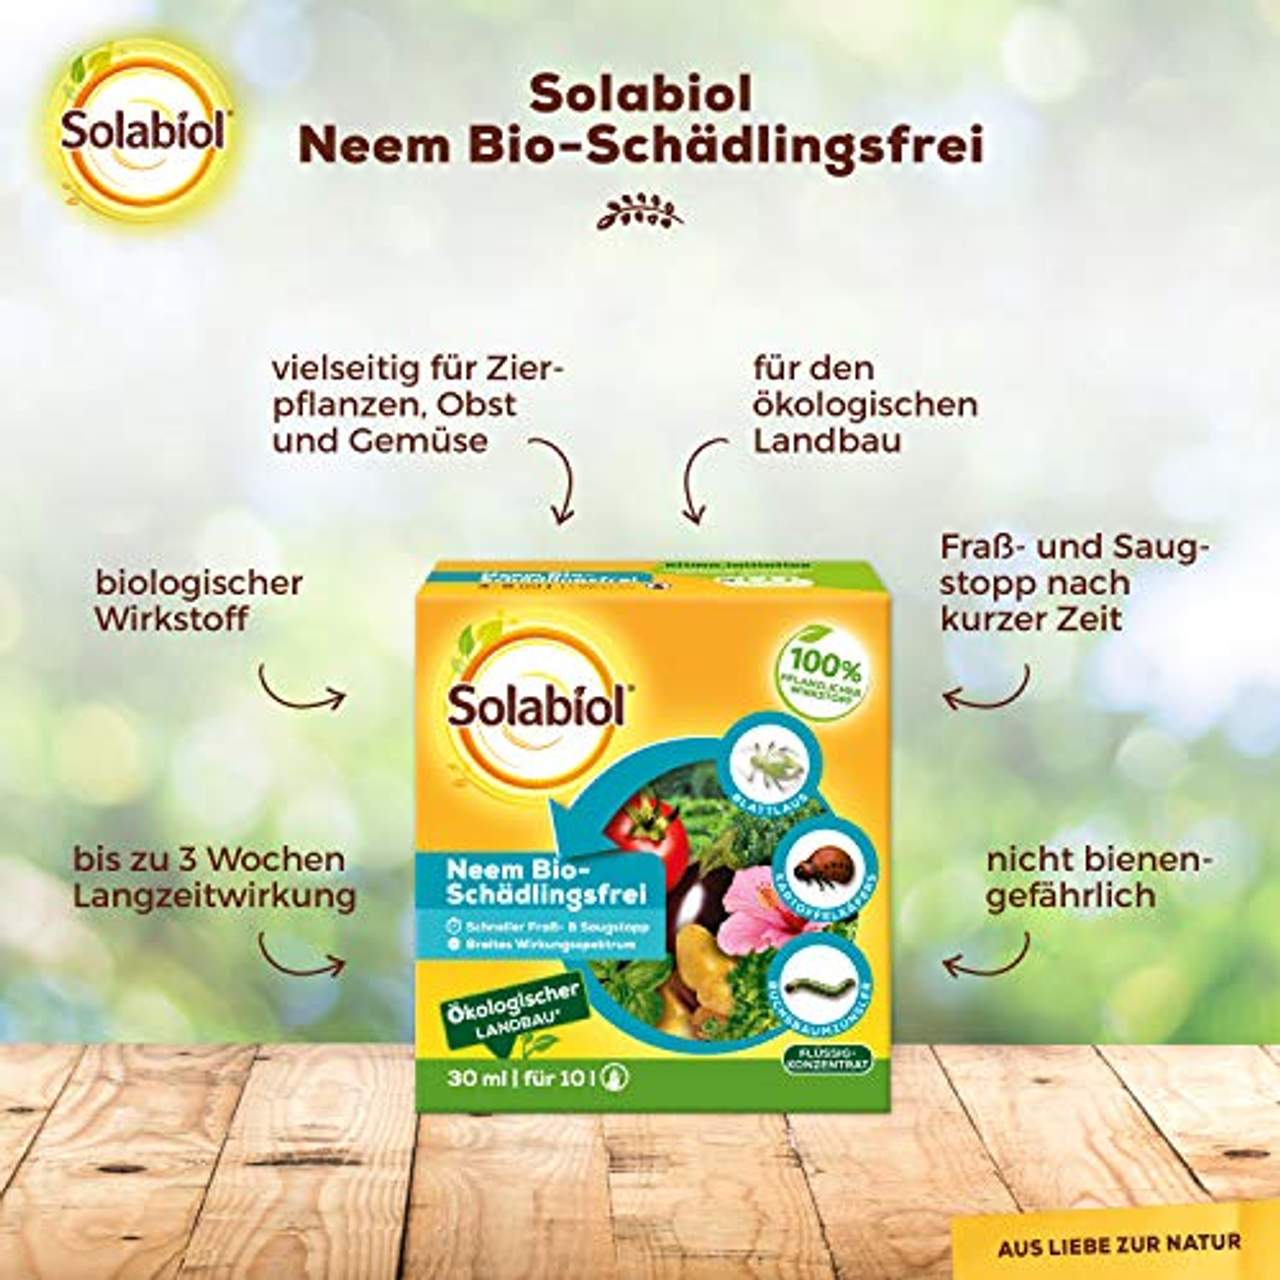 Solabiol Neem Bio-Schädlingsfrei biologische Schädlingsbekämpfung an Zierpflanzen